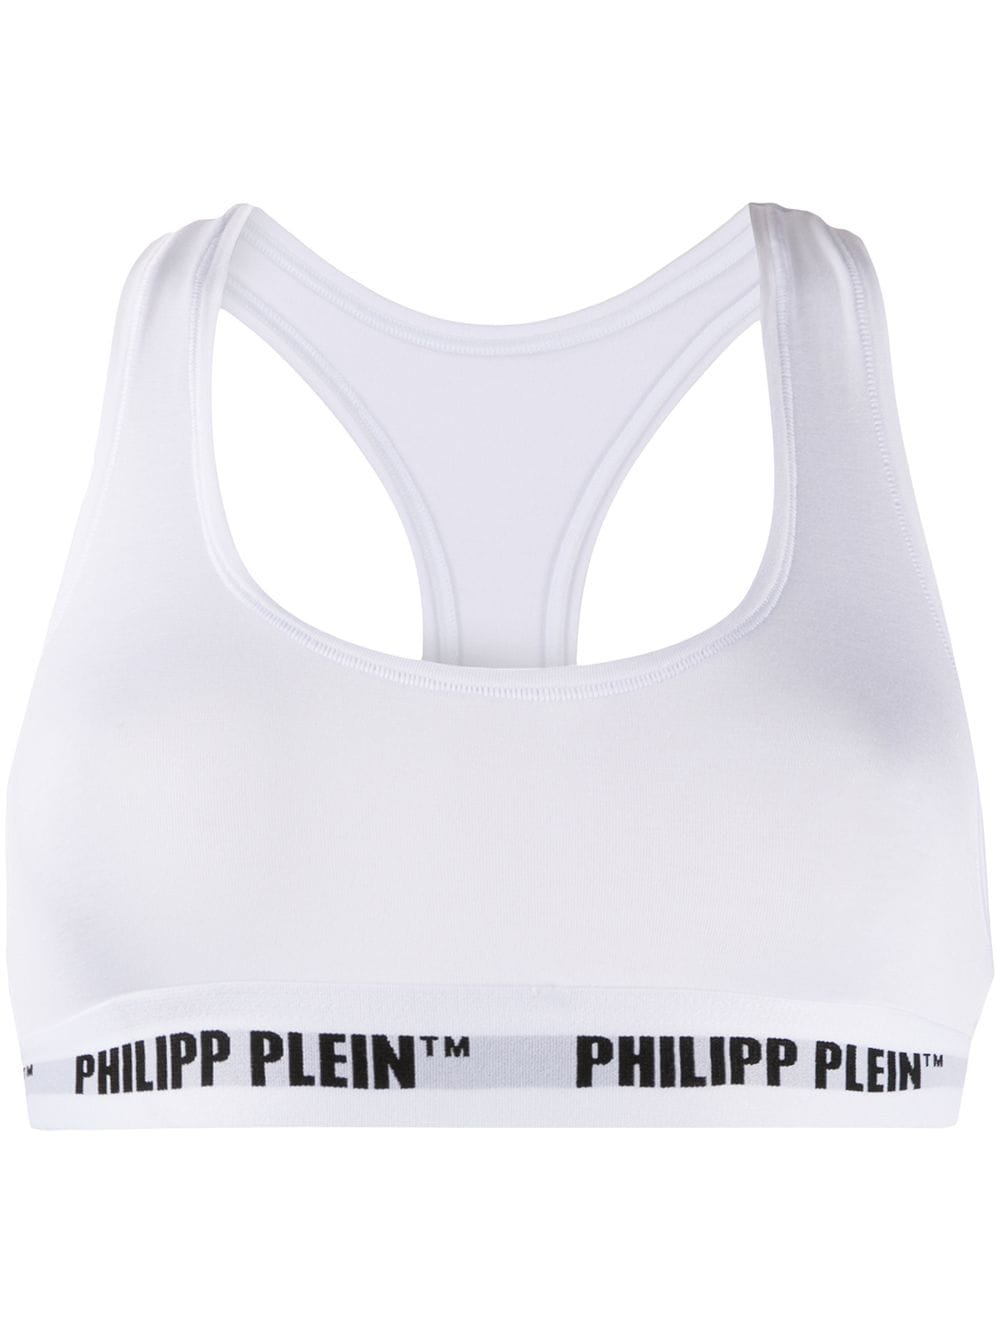 Philipp Plein logo band sports bra - White von Philipp Plein